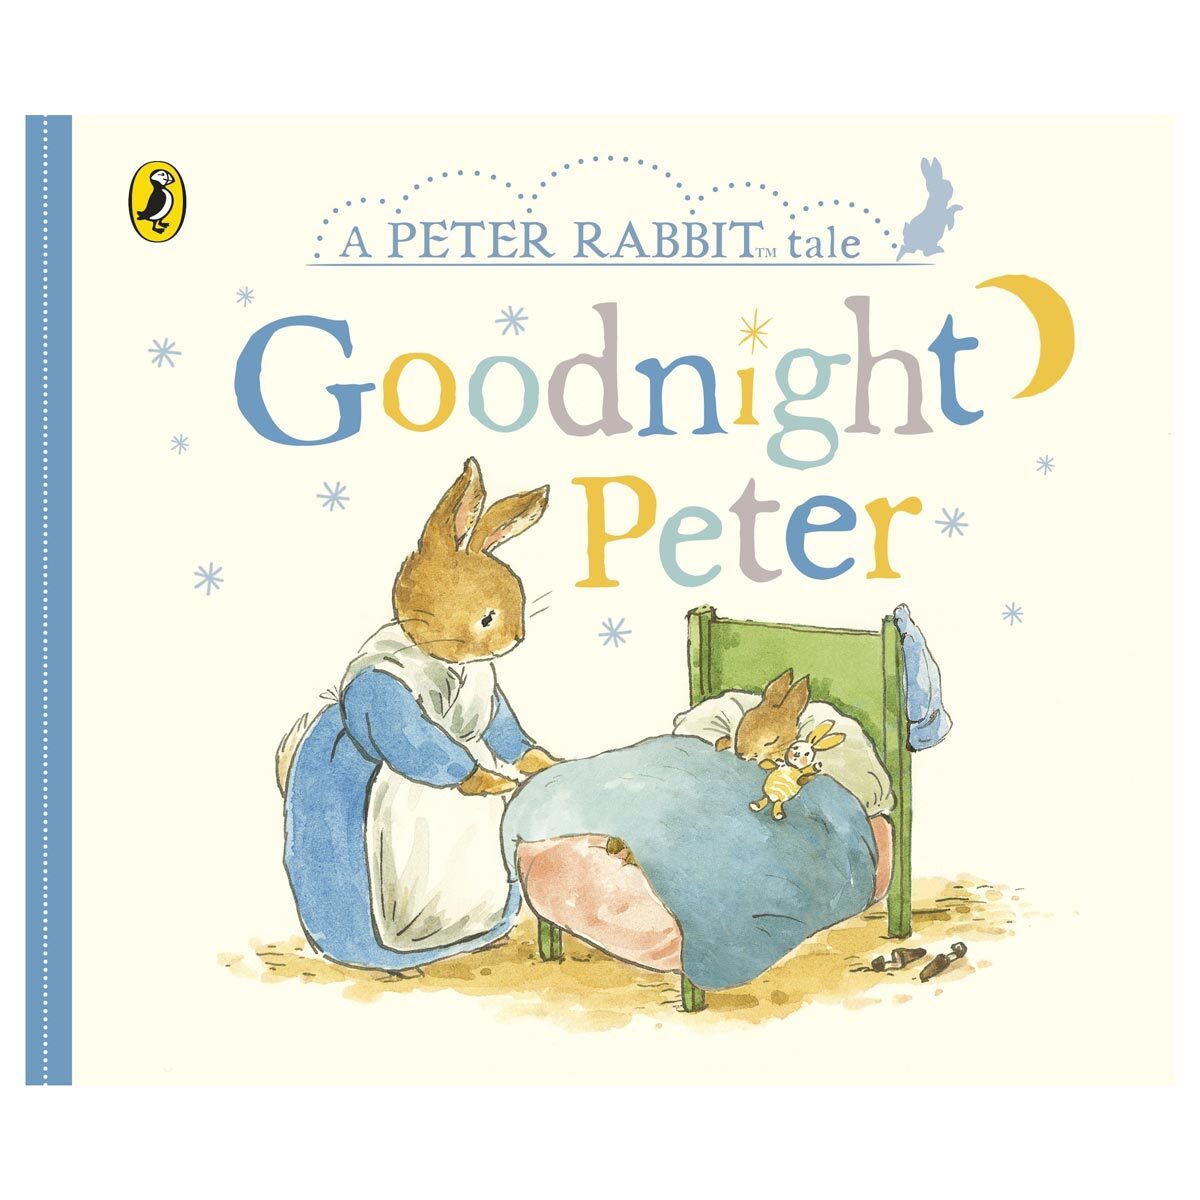 Peter Rabbit Storytime 3 Book Set (3+ Years)